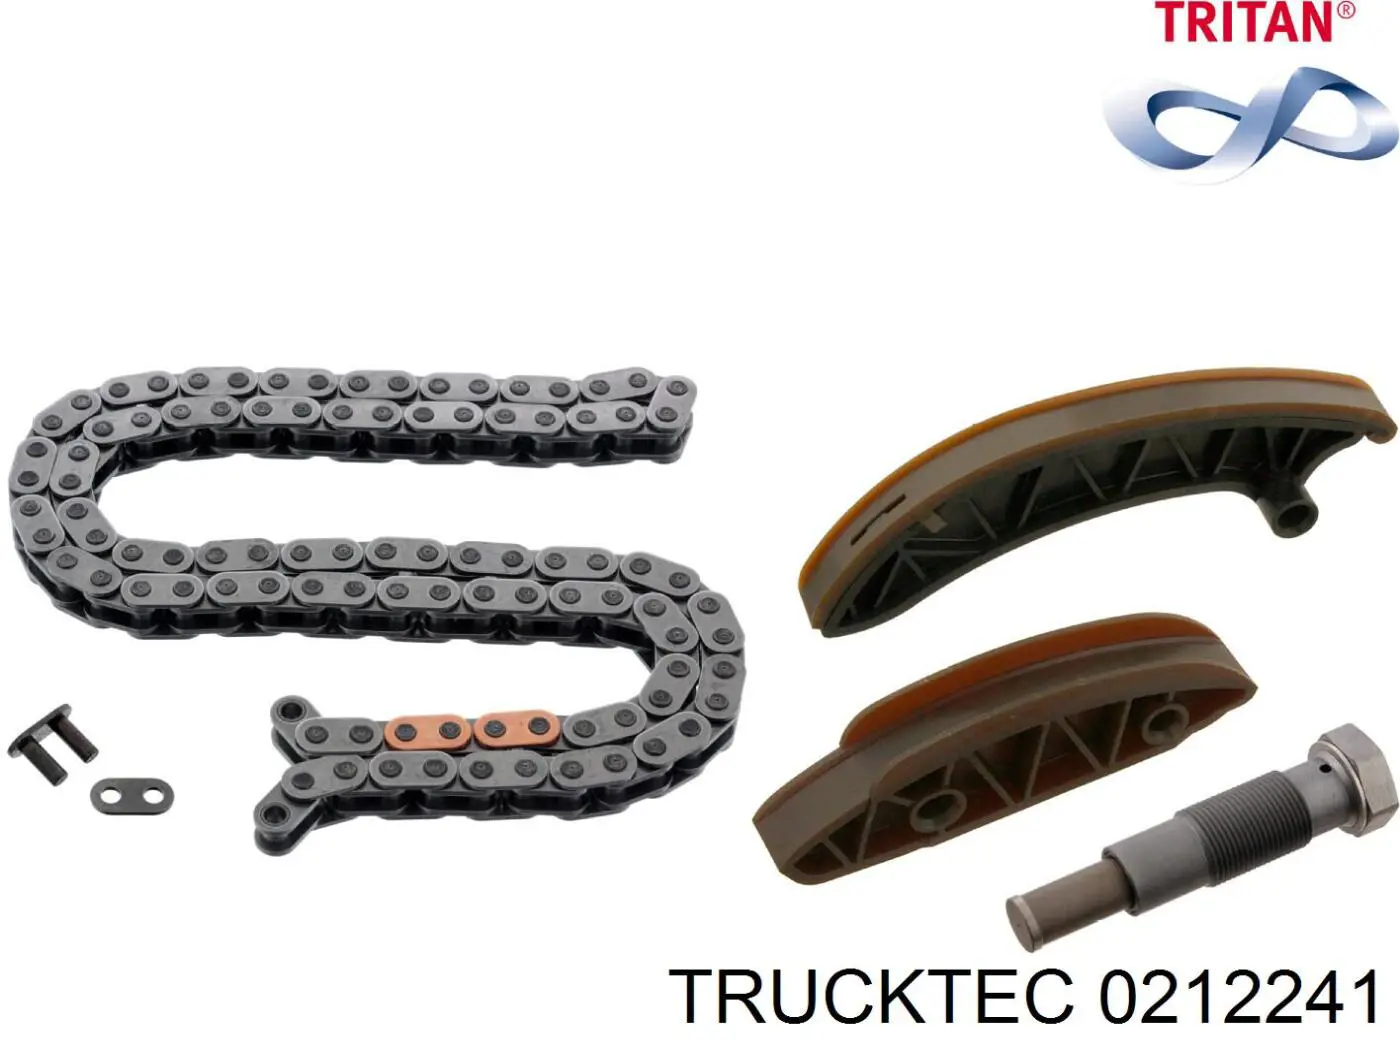 02.12.241 Trucktec kit de cadenas de distribución